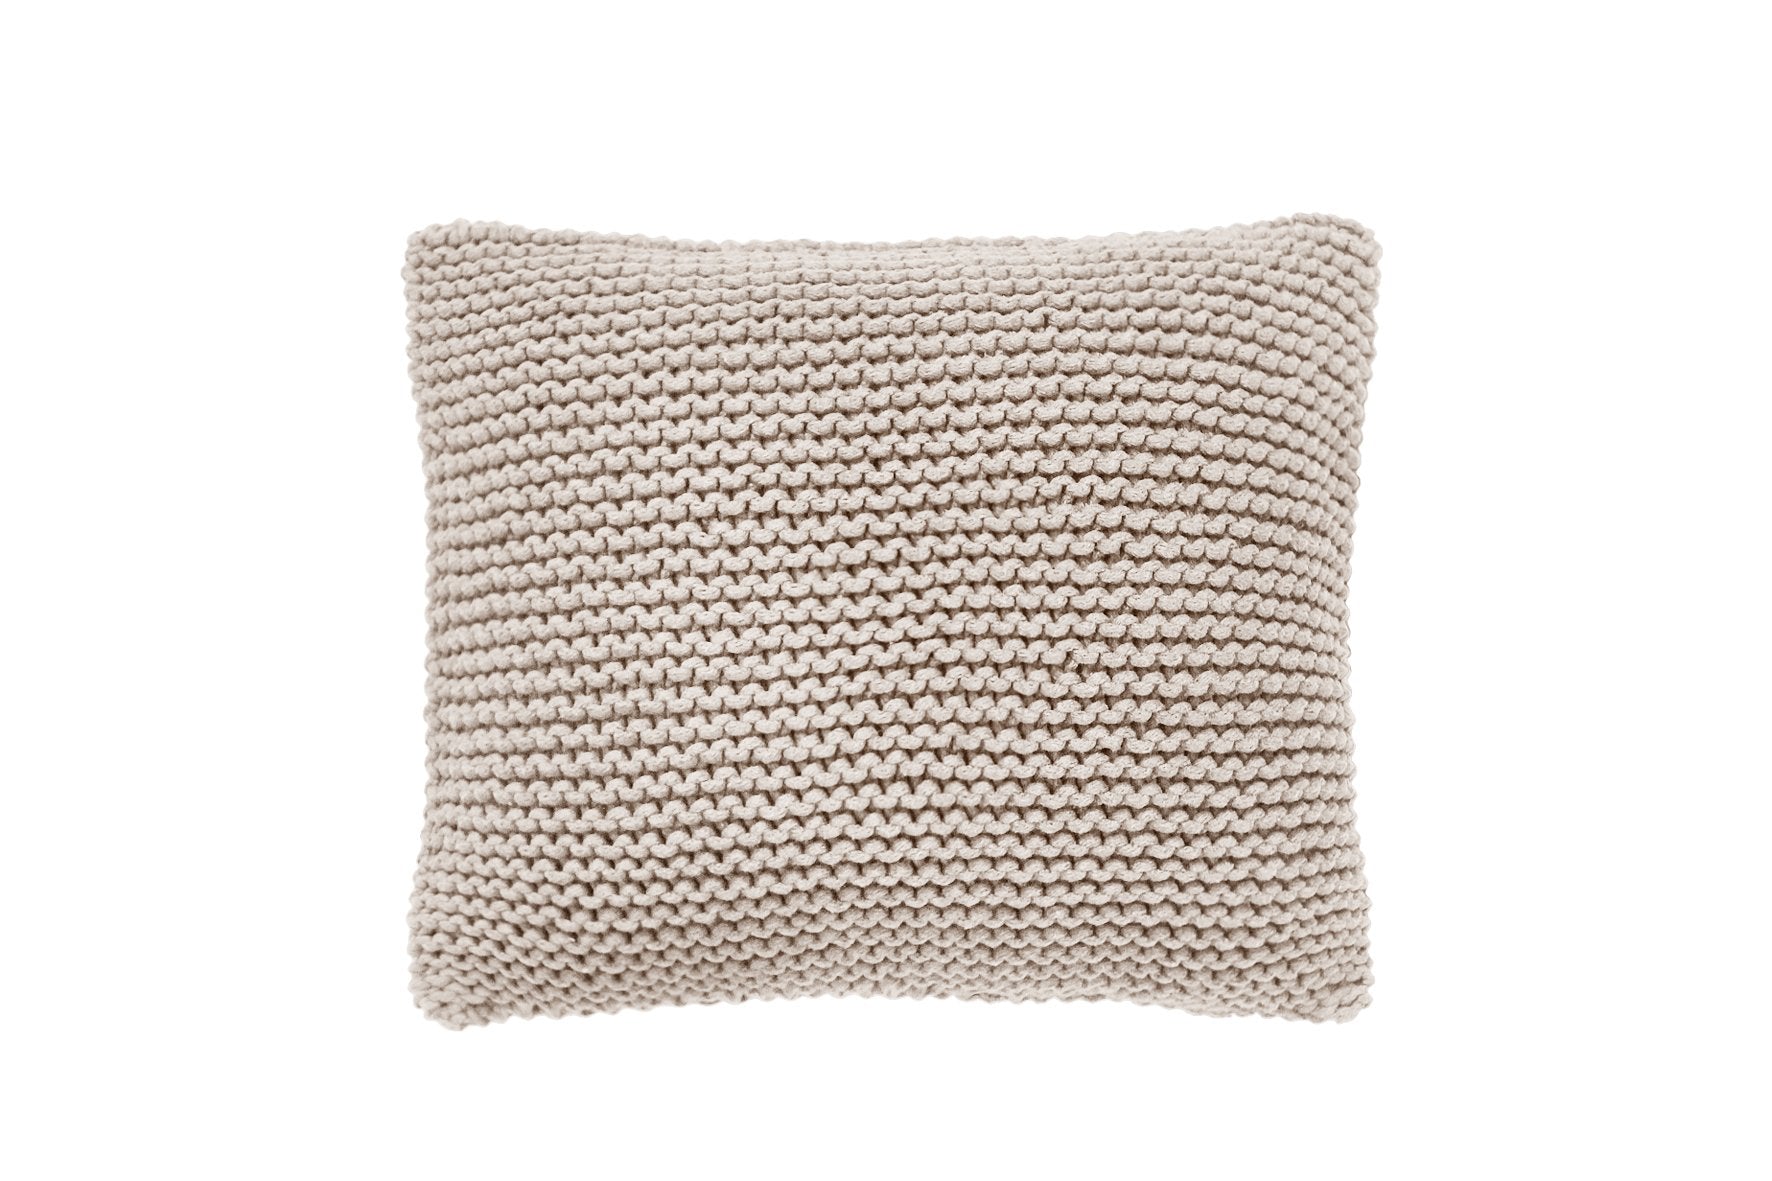 Zuri House Knitted Cushion | BEIGE - 1 cushion 45 x 45 cm